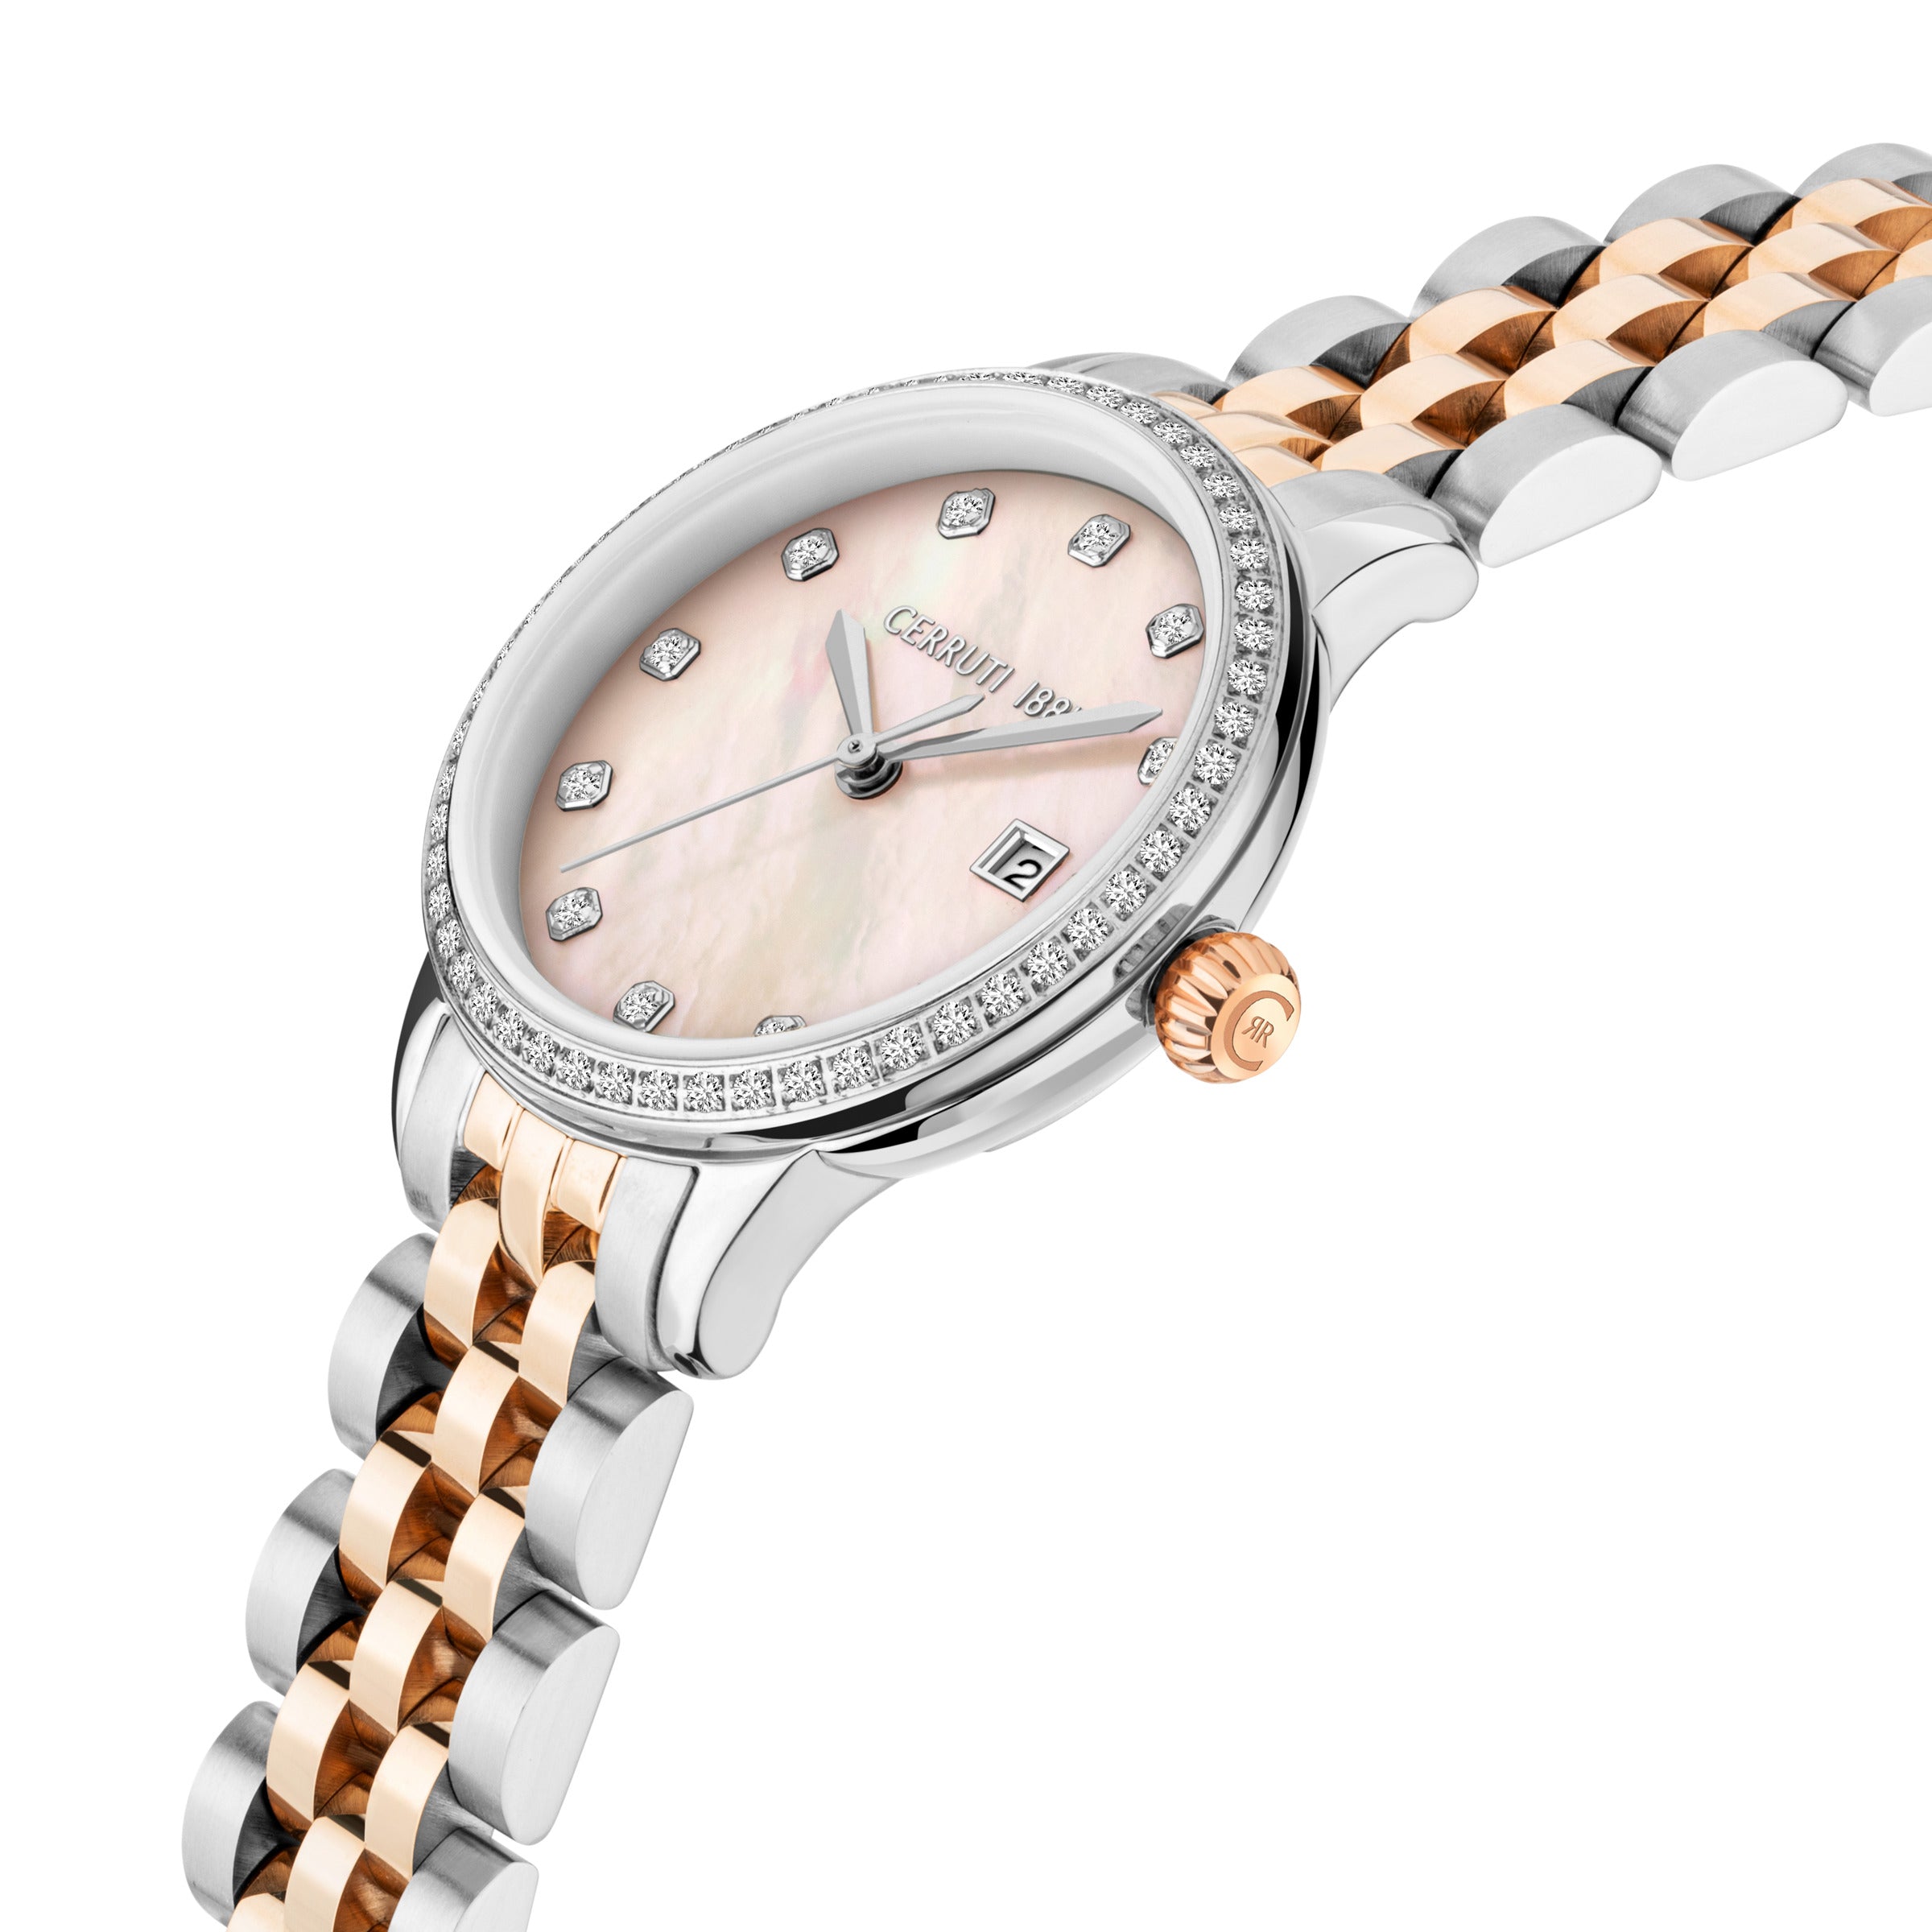 Cerruti Women's Quartz Watch, Gold Dial - CER-0474